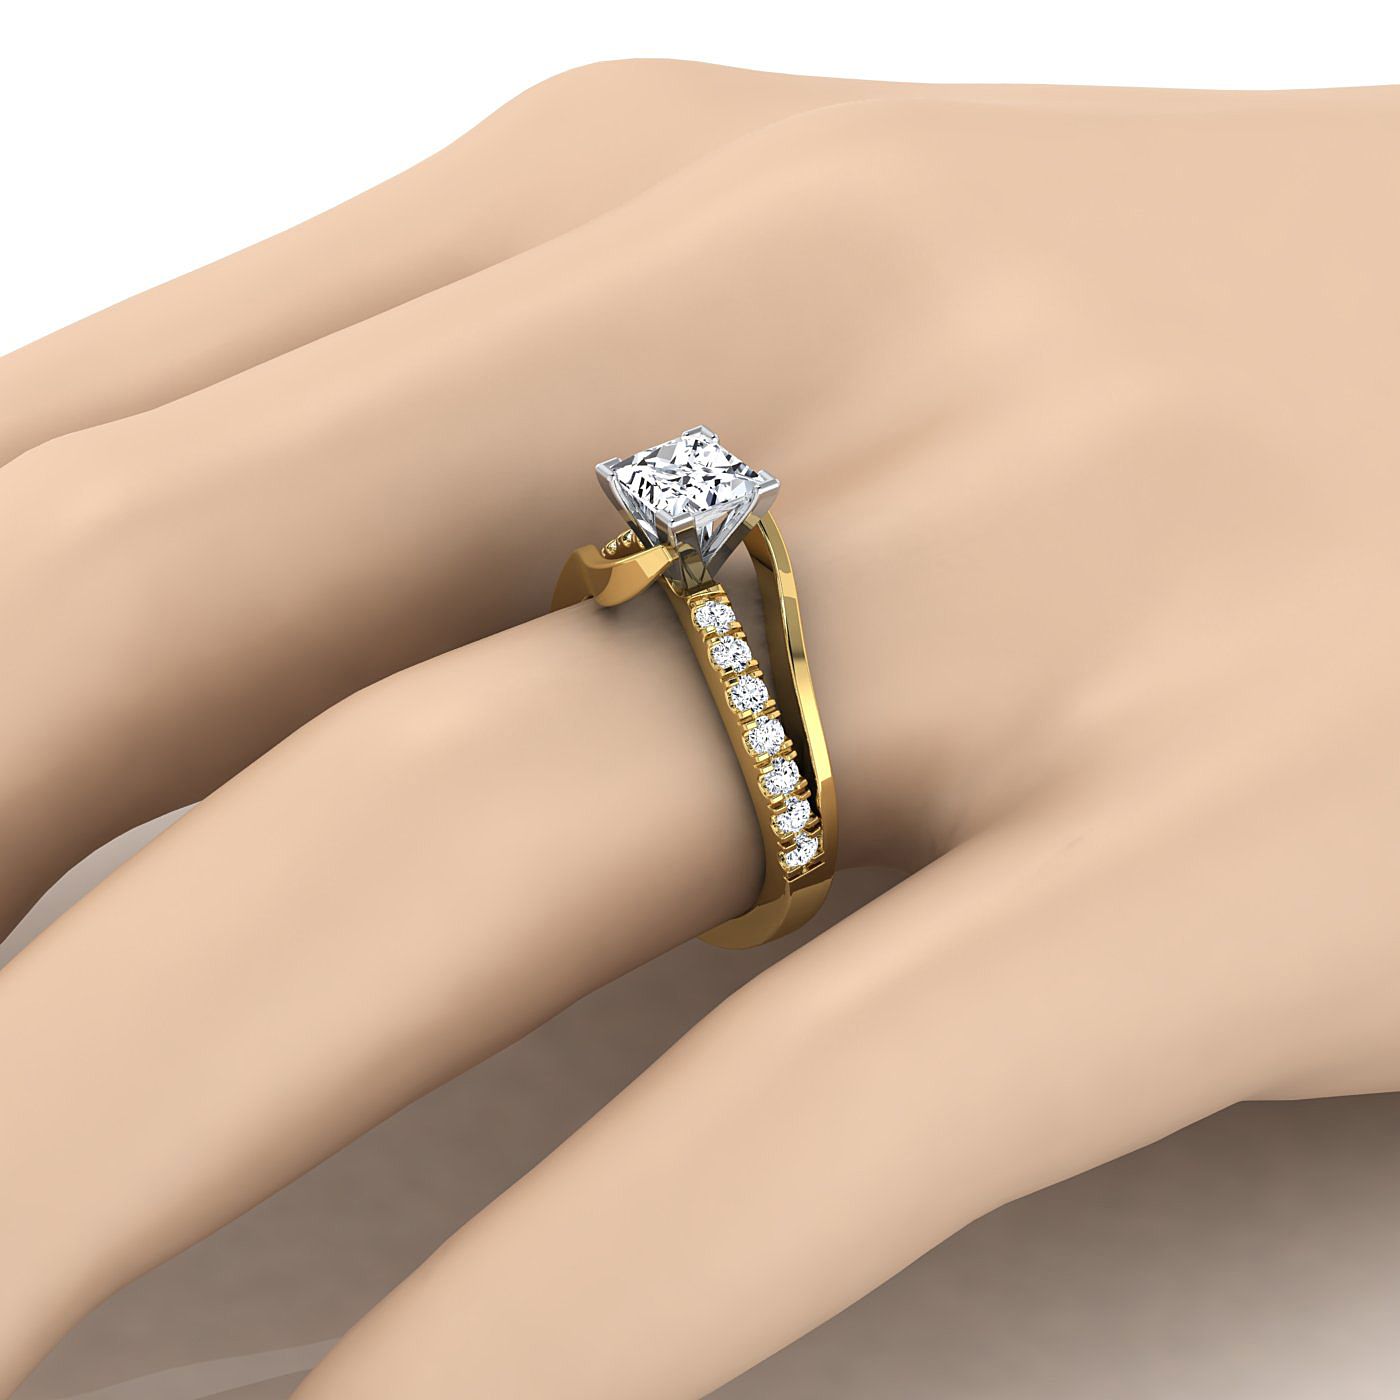 14K Yellow Gold Princess Cut Unique Bypass Diamond Pave Swirl Engagement Ring -3/8ctw